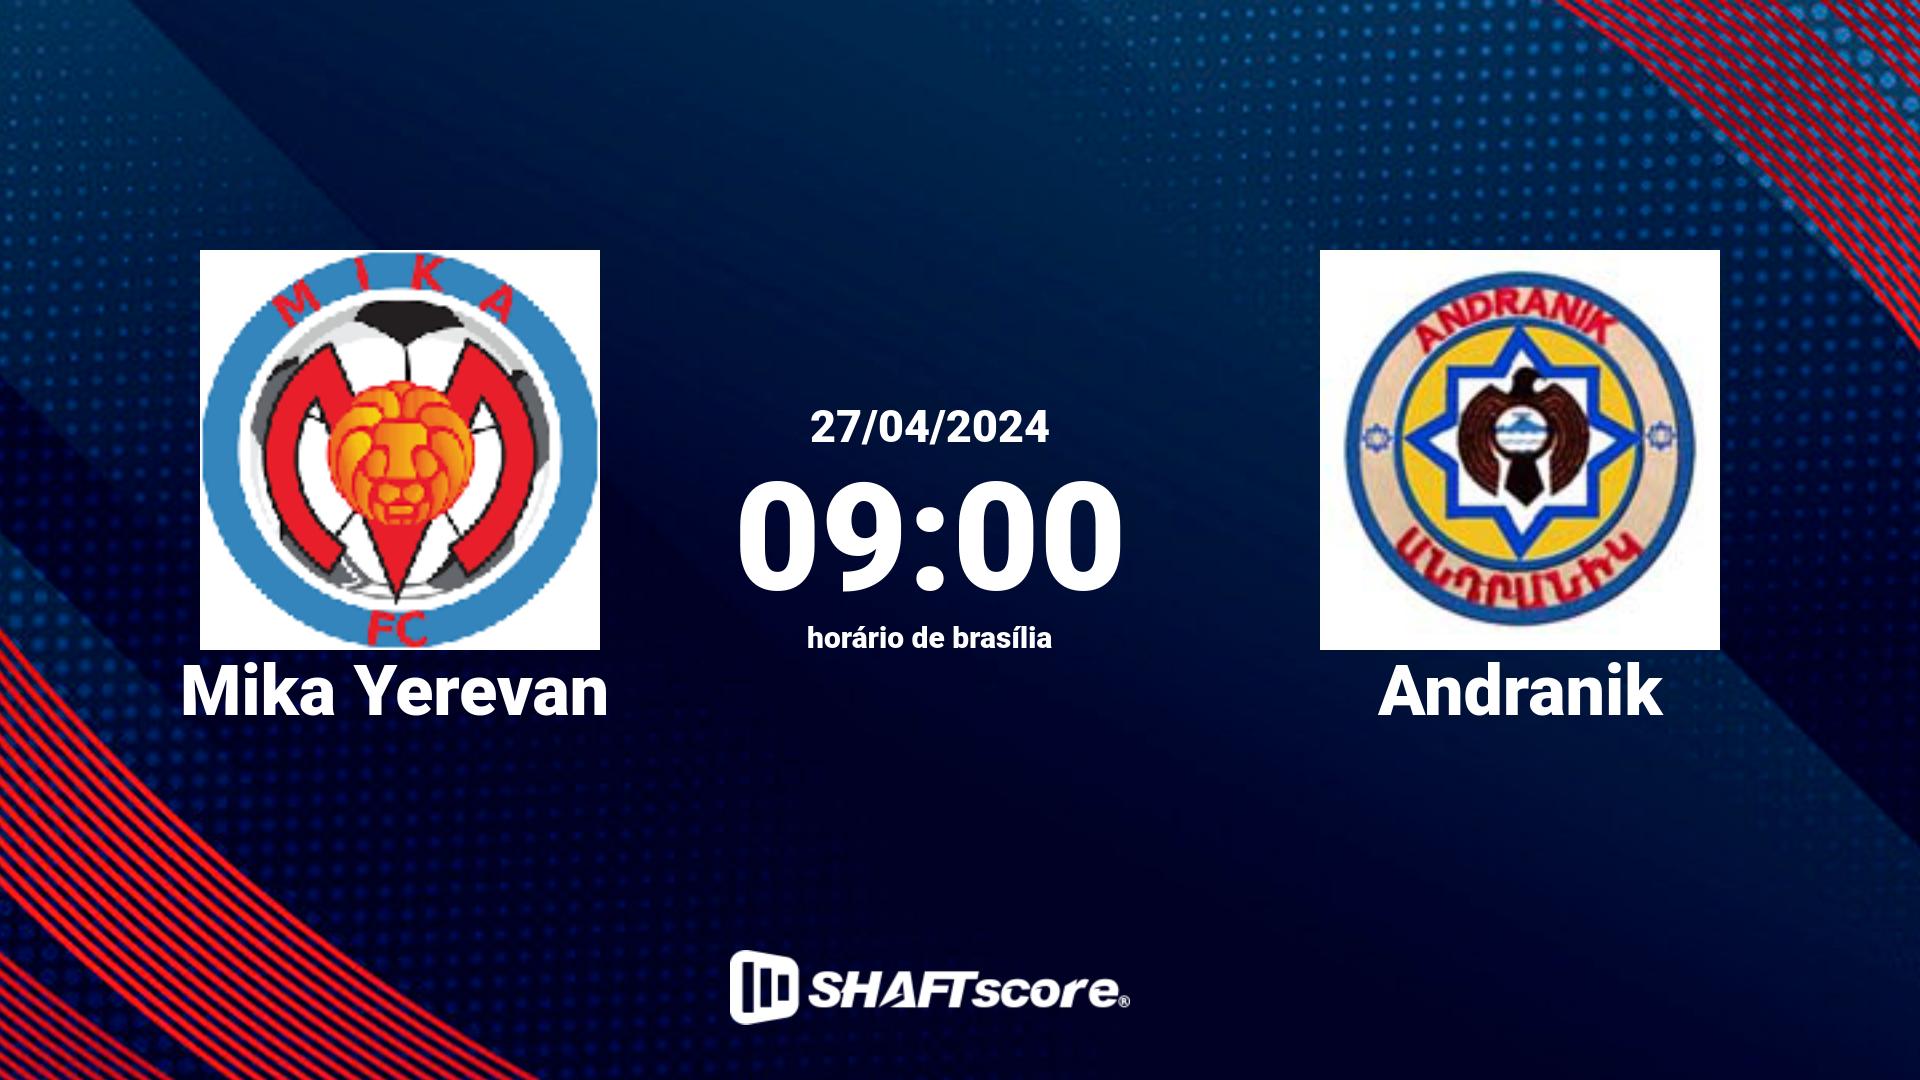 Estatísticas do jogo Mika Yerevan vs Andranik 27.04 09:00